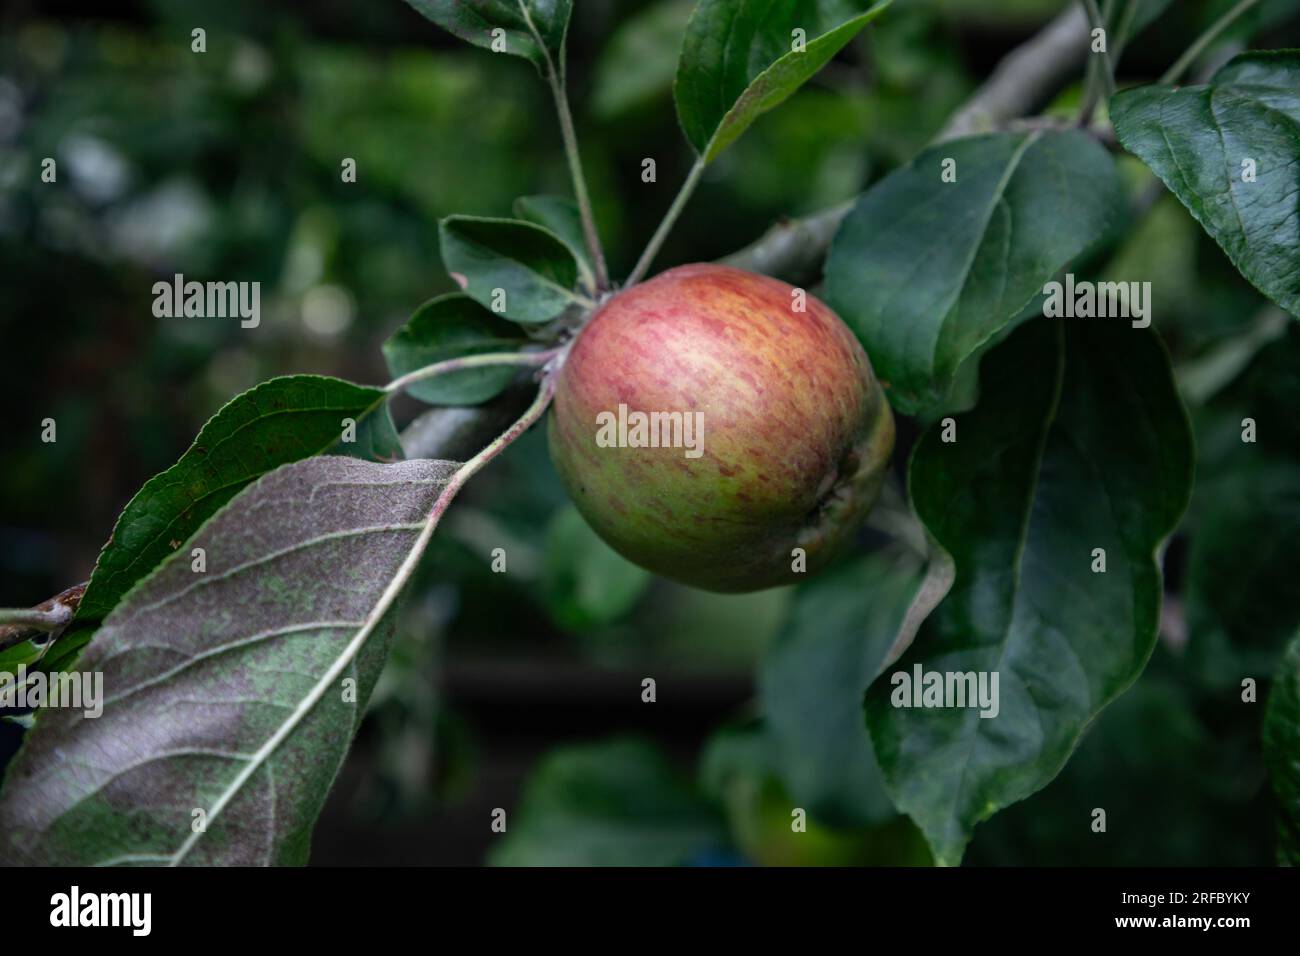 Gravenstein apples ripening on a tree. Stock Photo